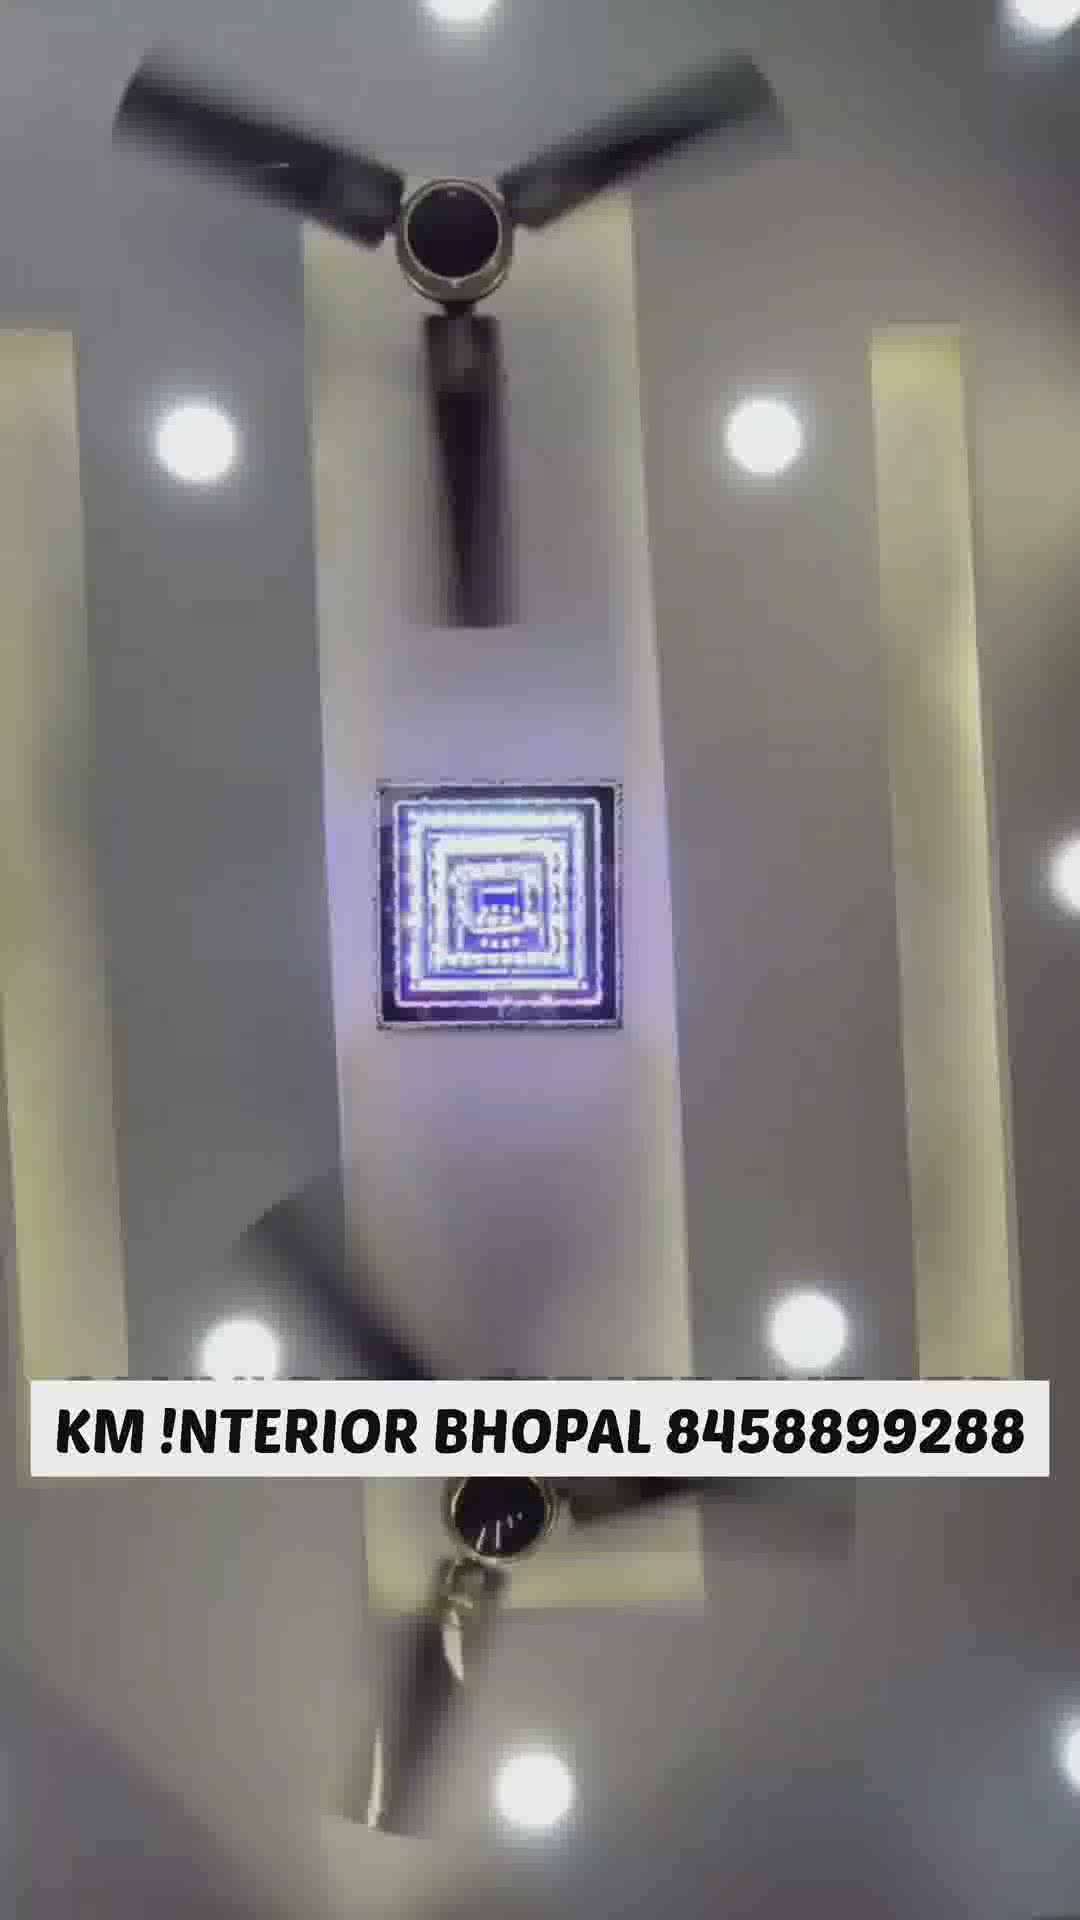 KM INTERIOR BHOPAL M.P. 43
Contact : 8458899288 , 9685481987